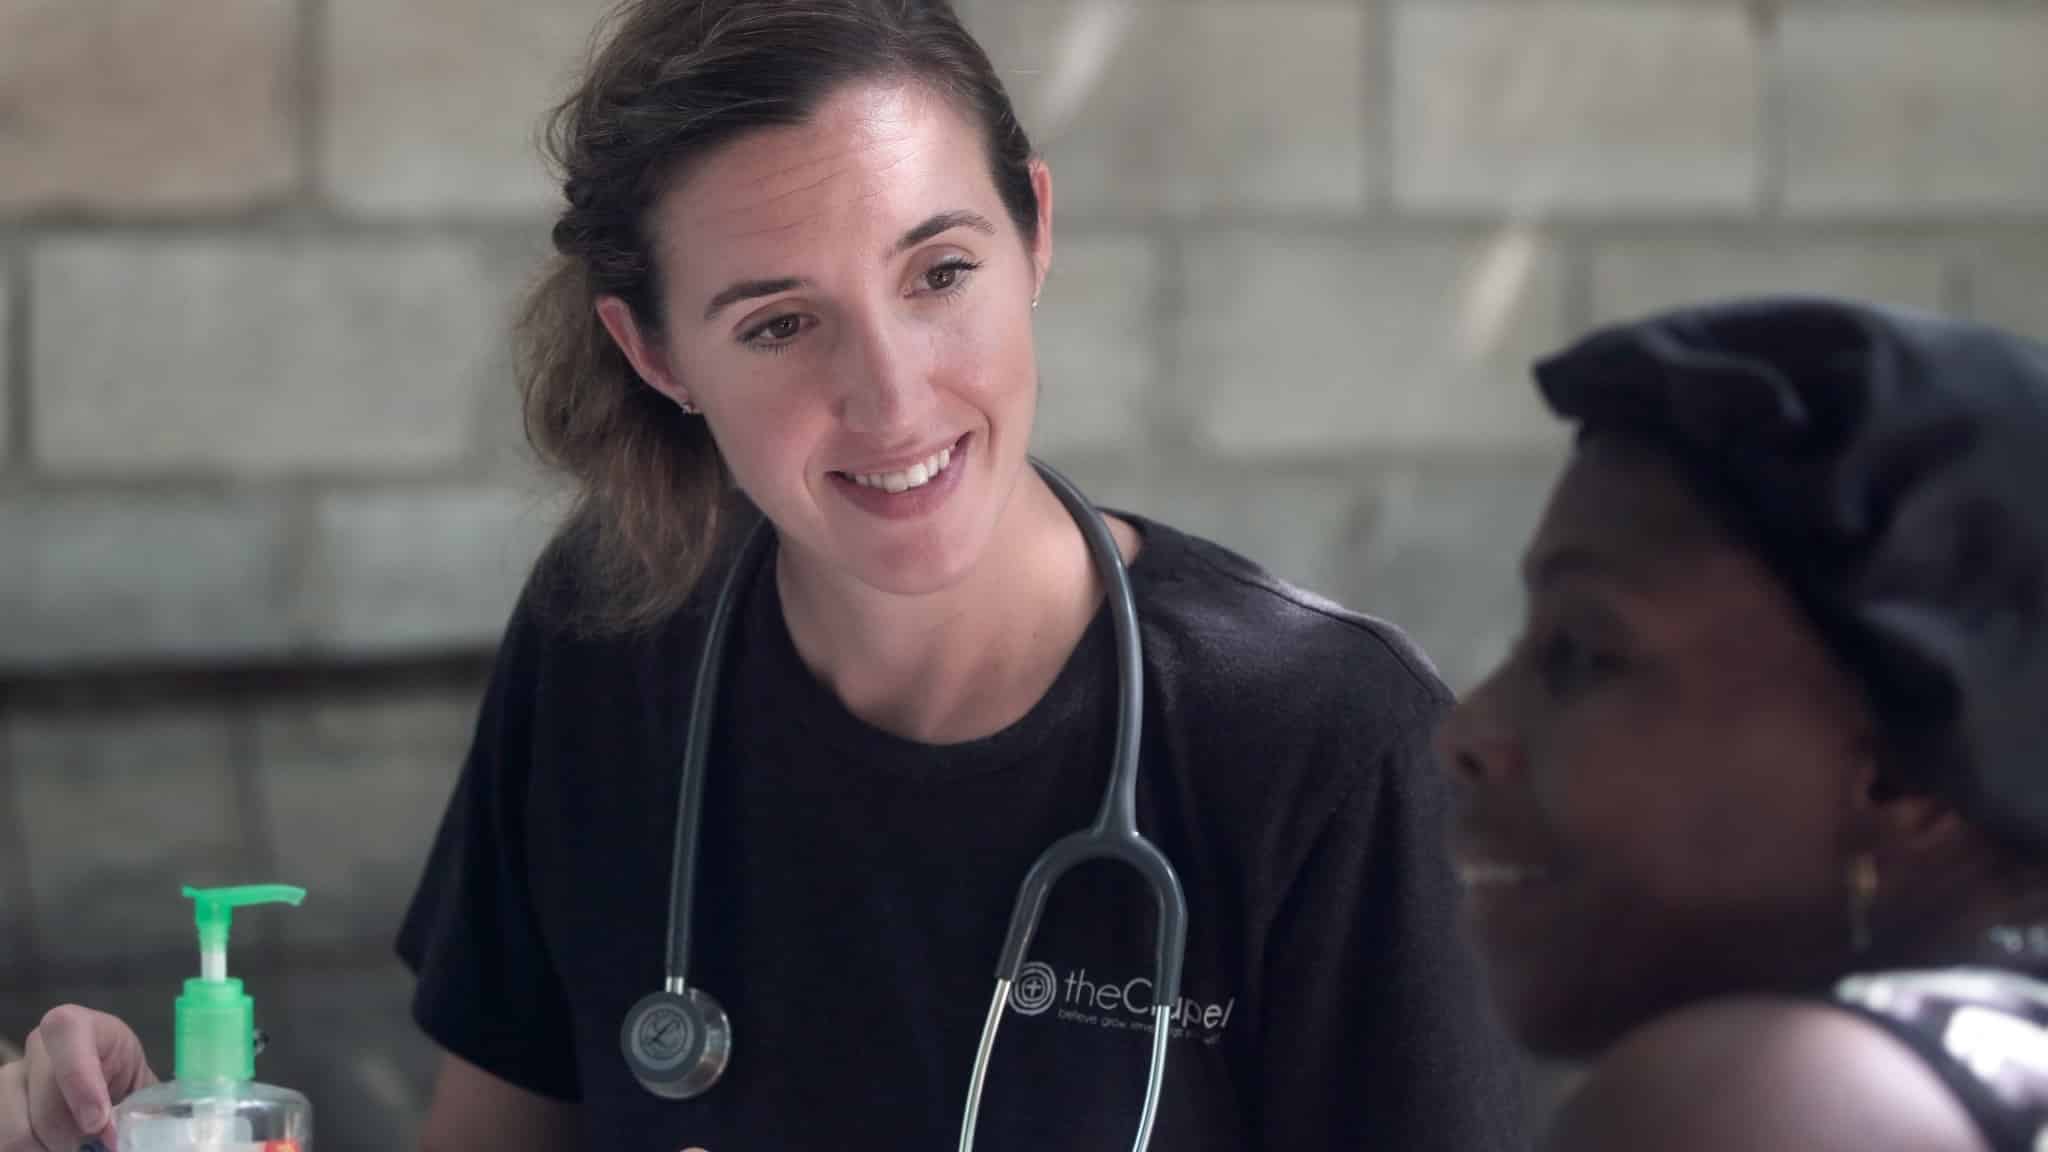 Smiling nurse with a female patient